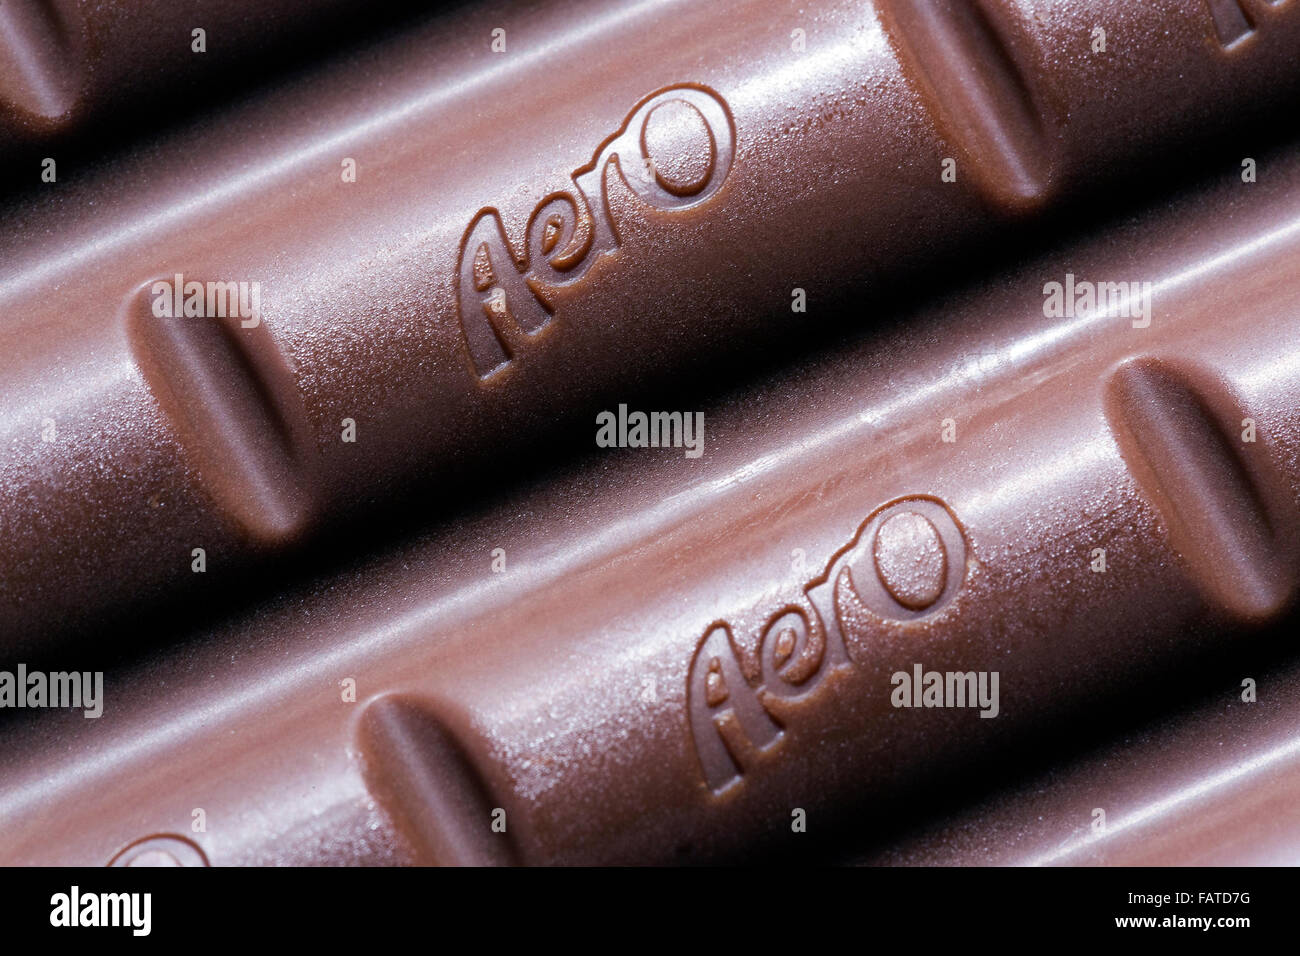 Aero chocolate bar Stock Photo